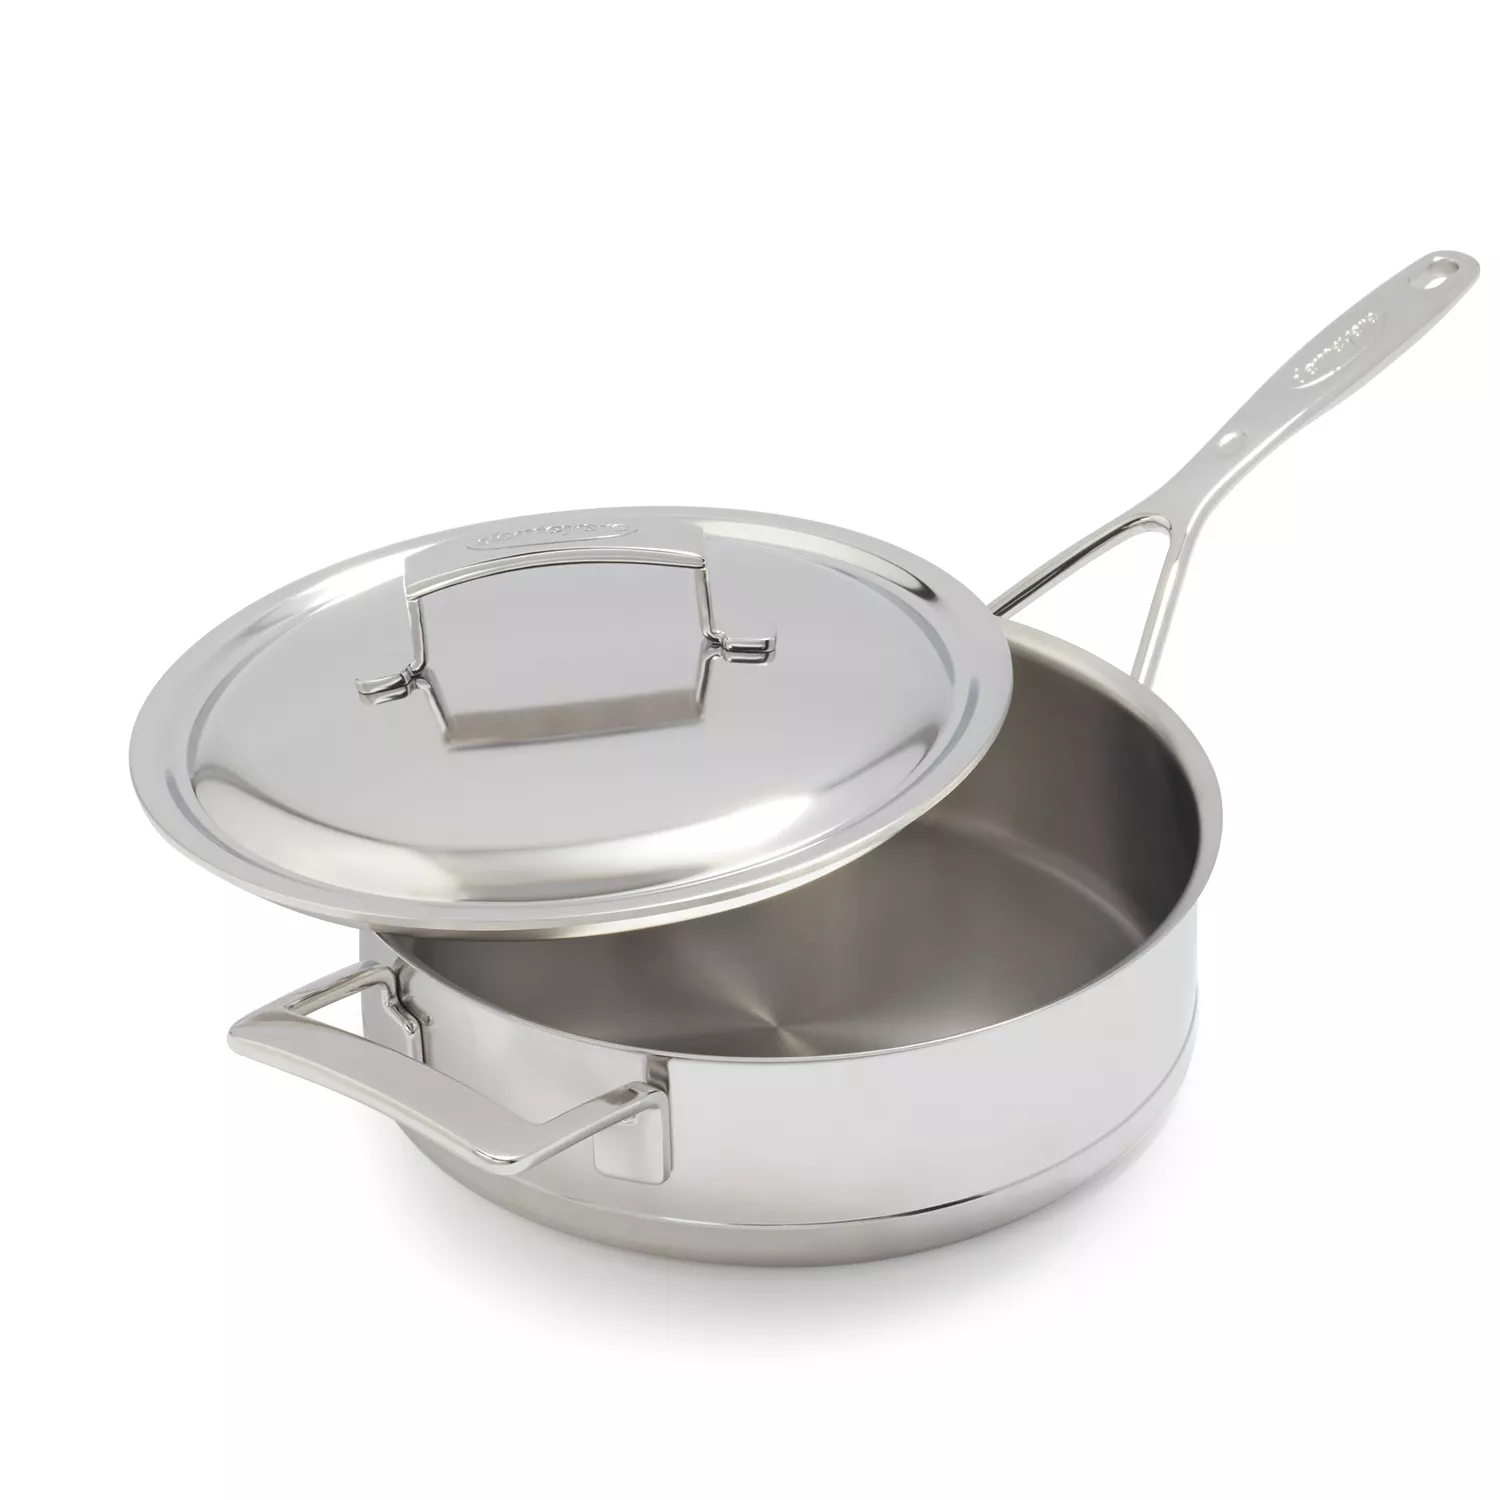 Demeyere Silver7 Stainless Steel Sauté Pan with Lid | Sur La Table